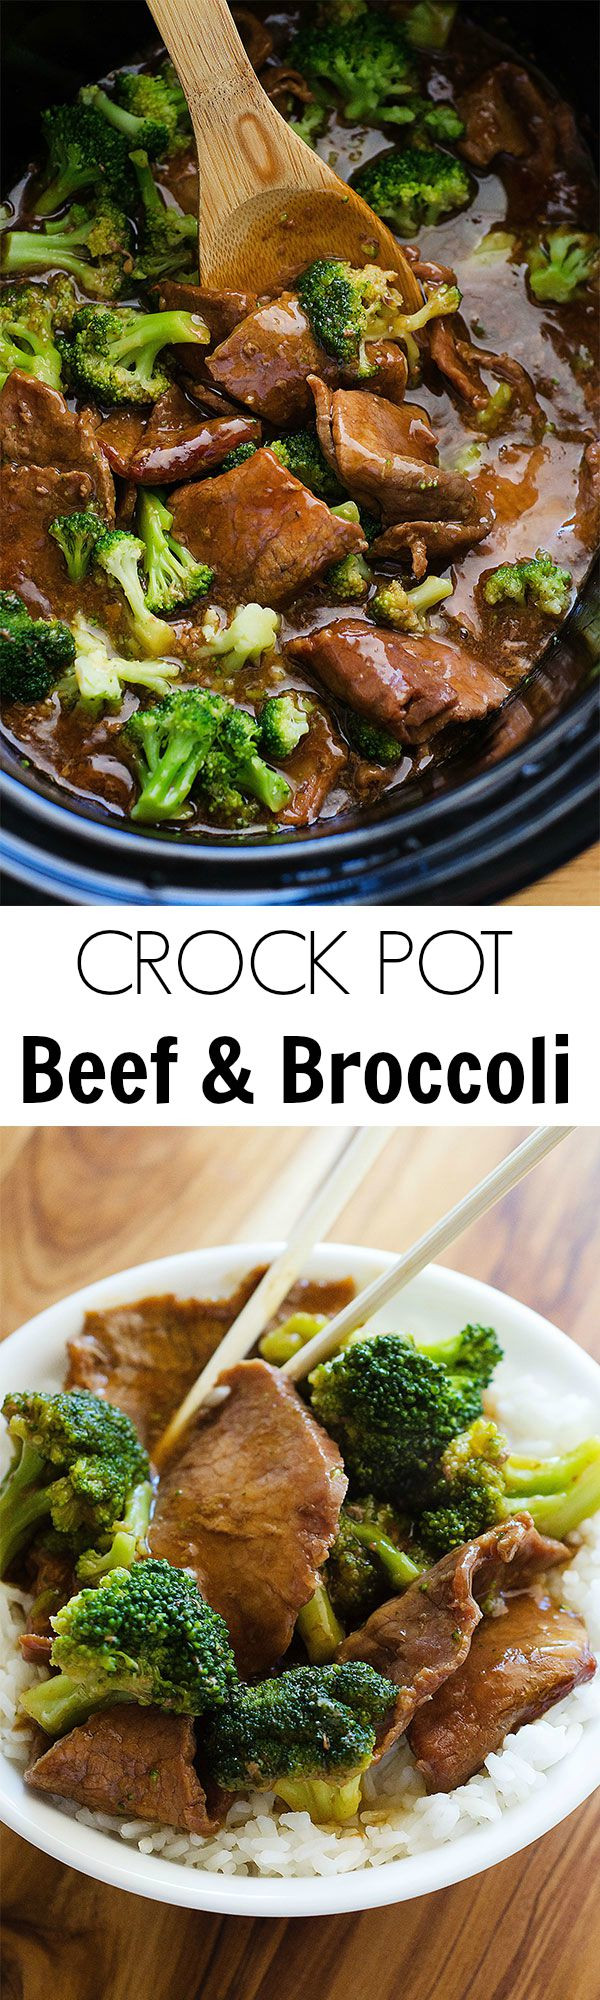 Beef And Broccoli Crock Pot
 Crock Pot Beef and Broccoli